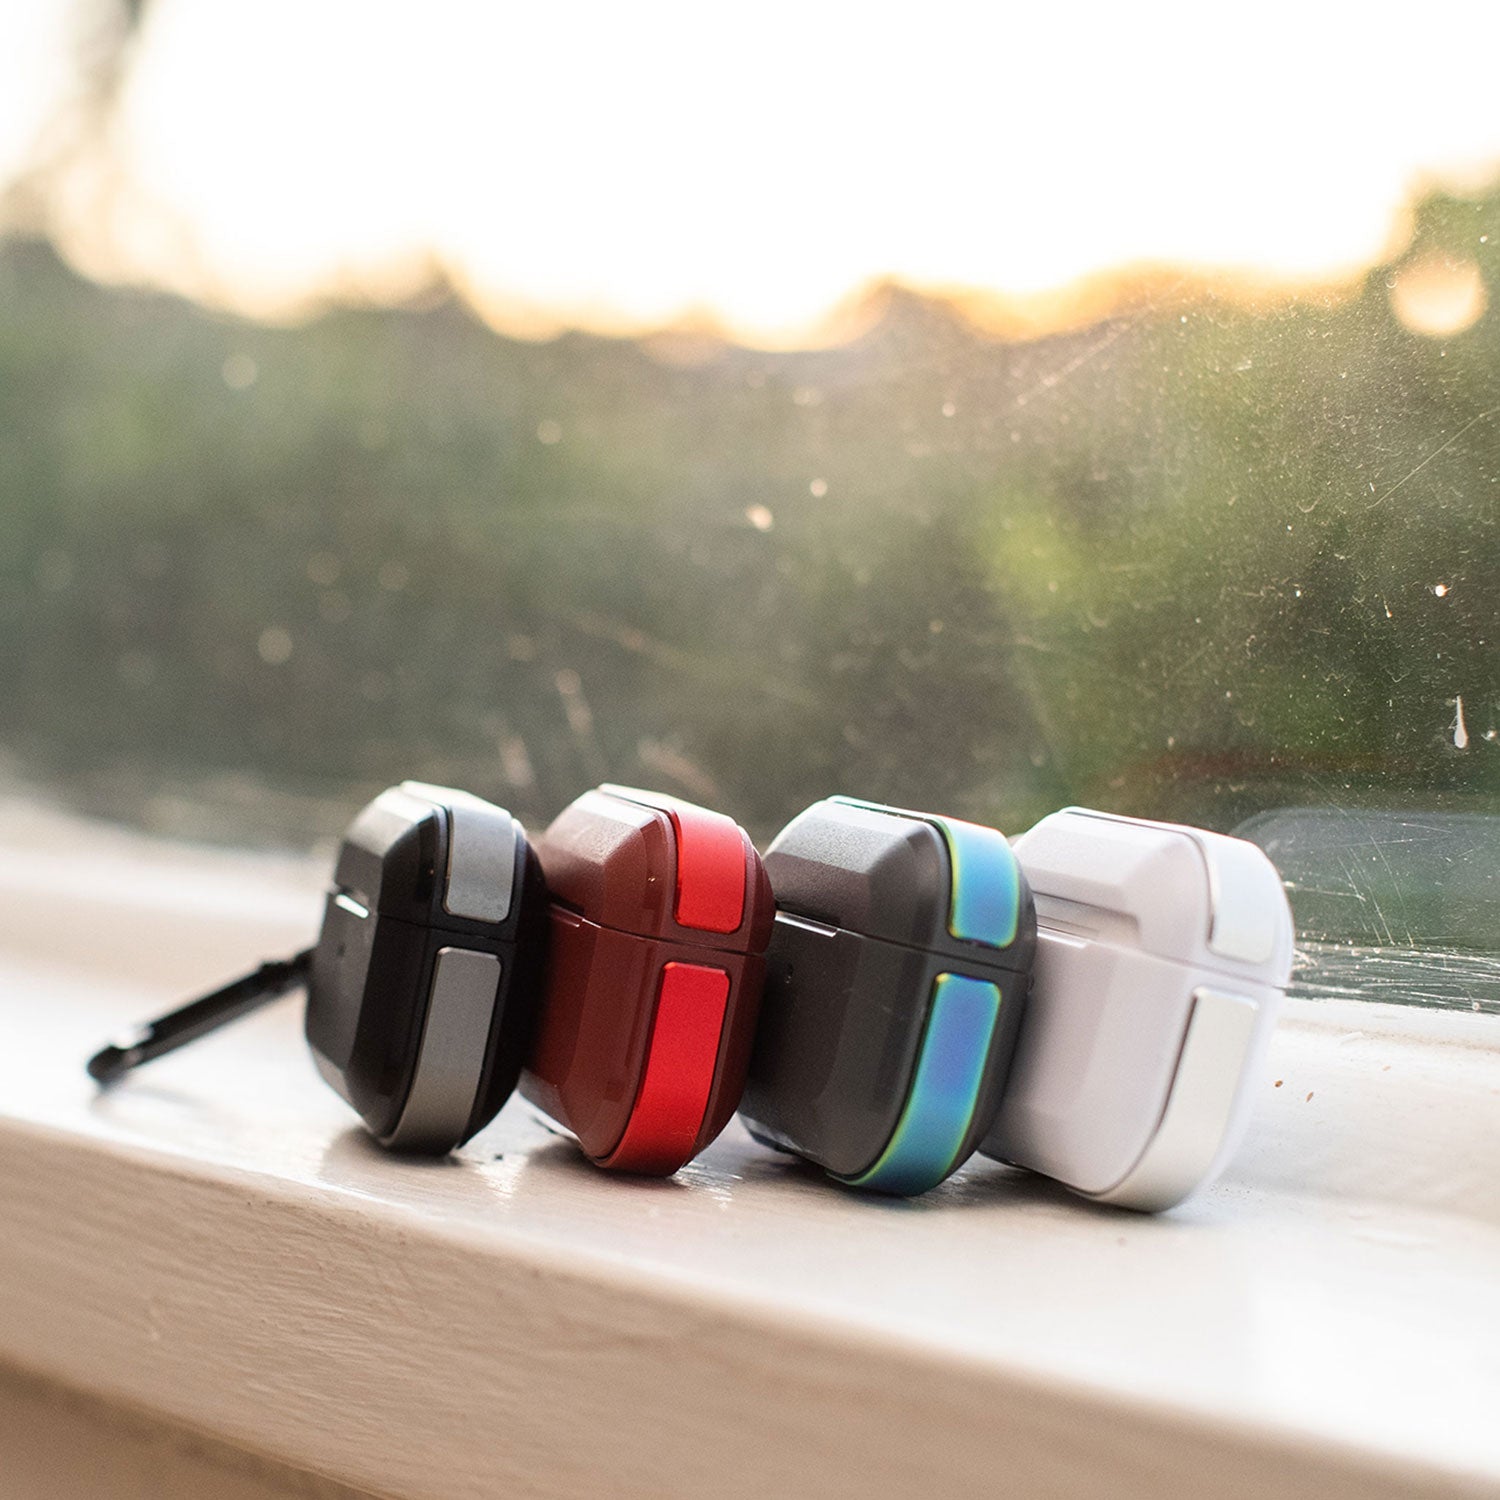 Raptic Apple AirPods Pro Case - TREK wireless charging earbuds sitting on a window sill.